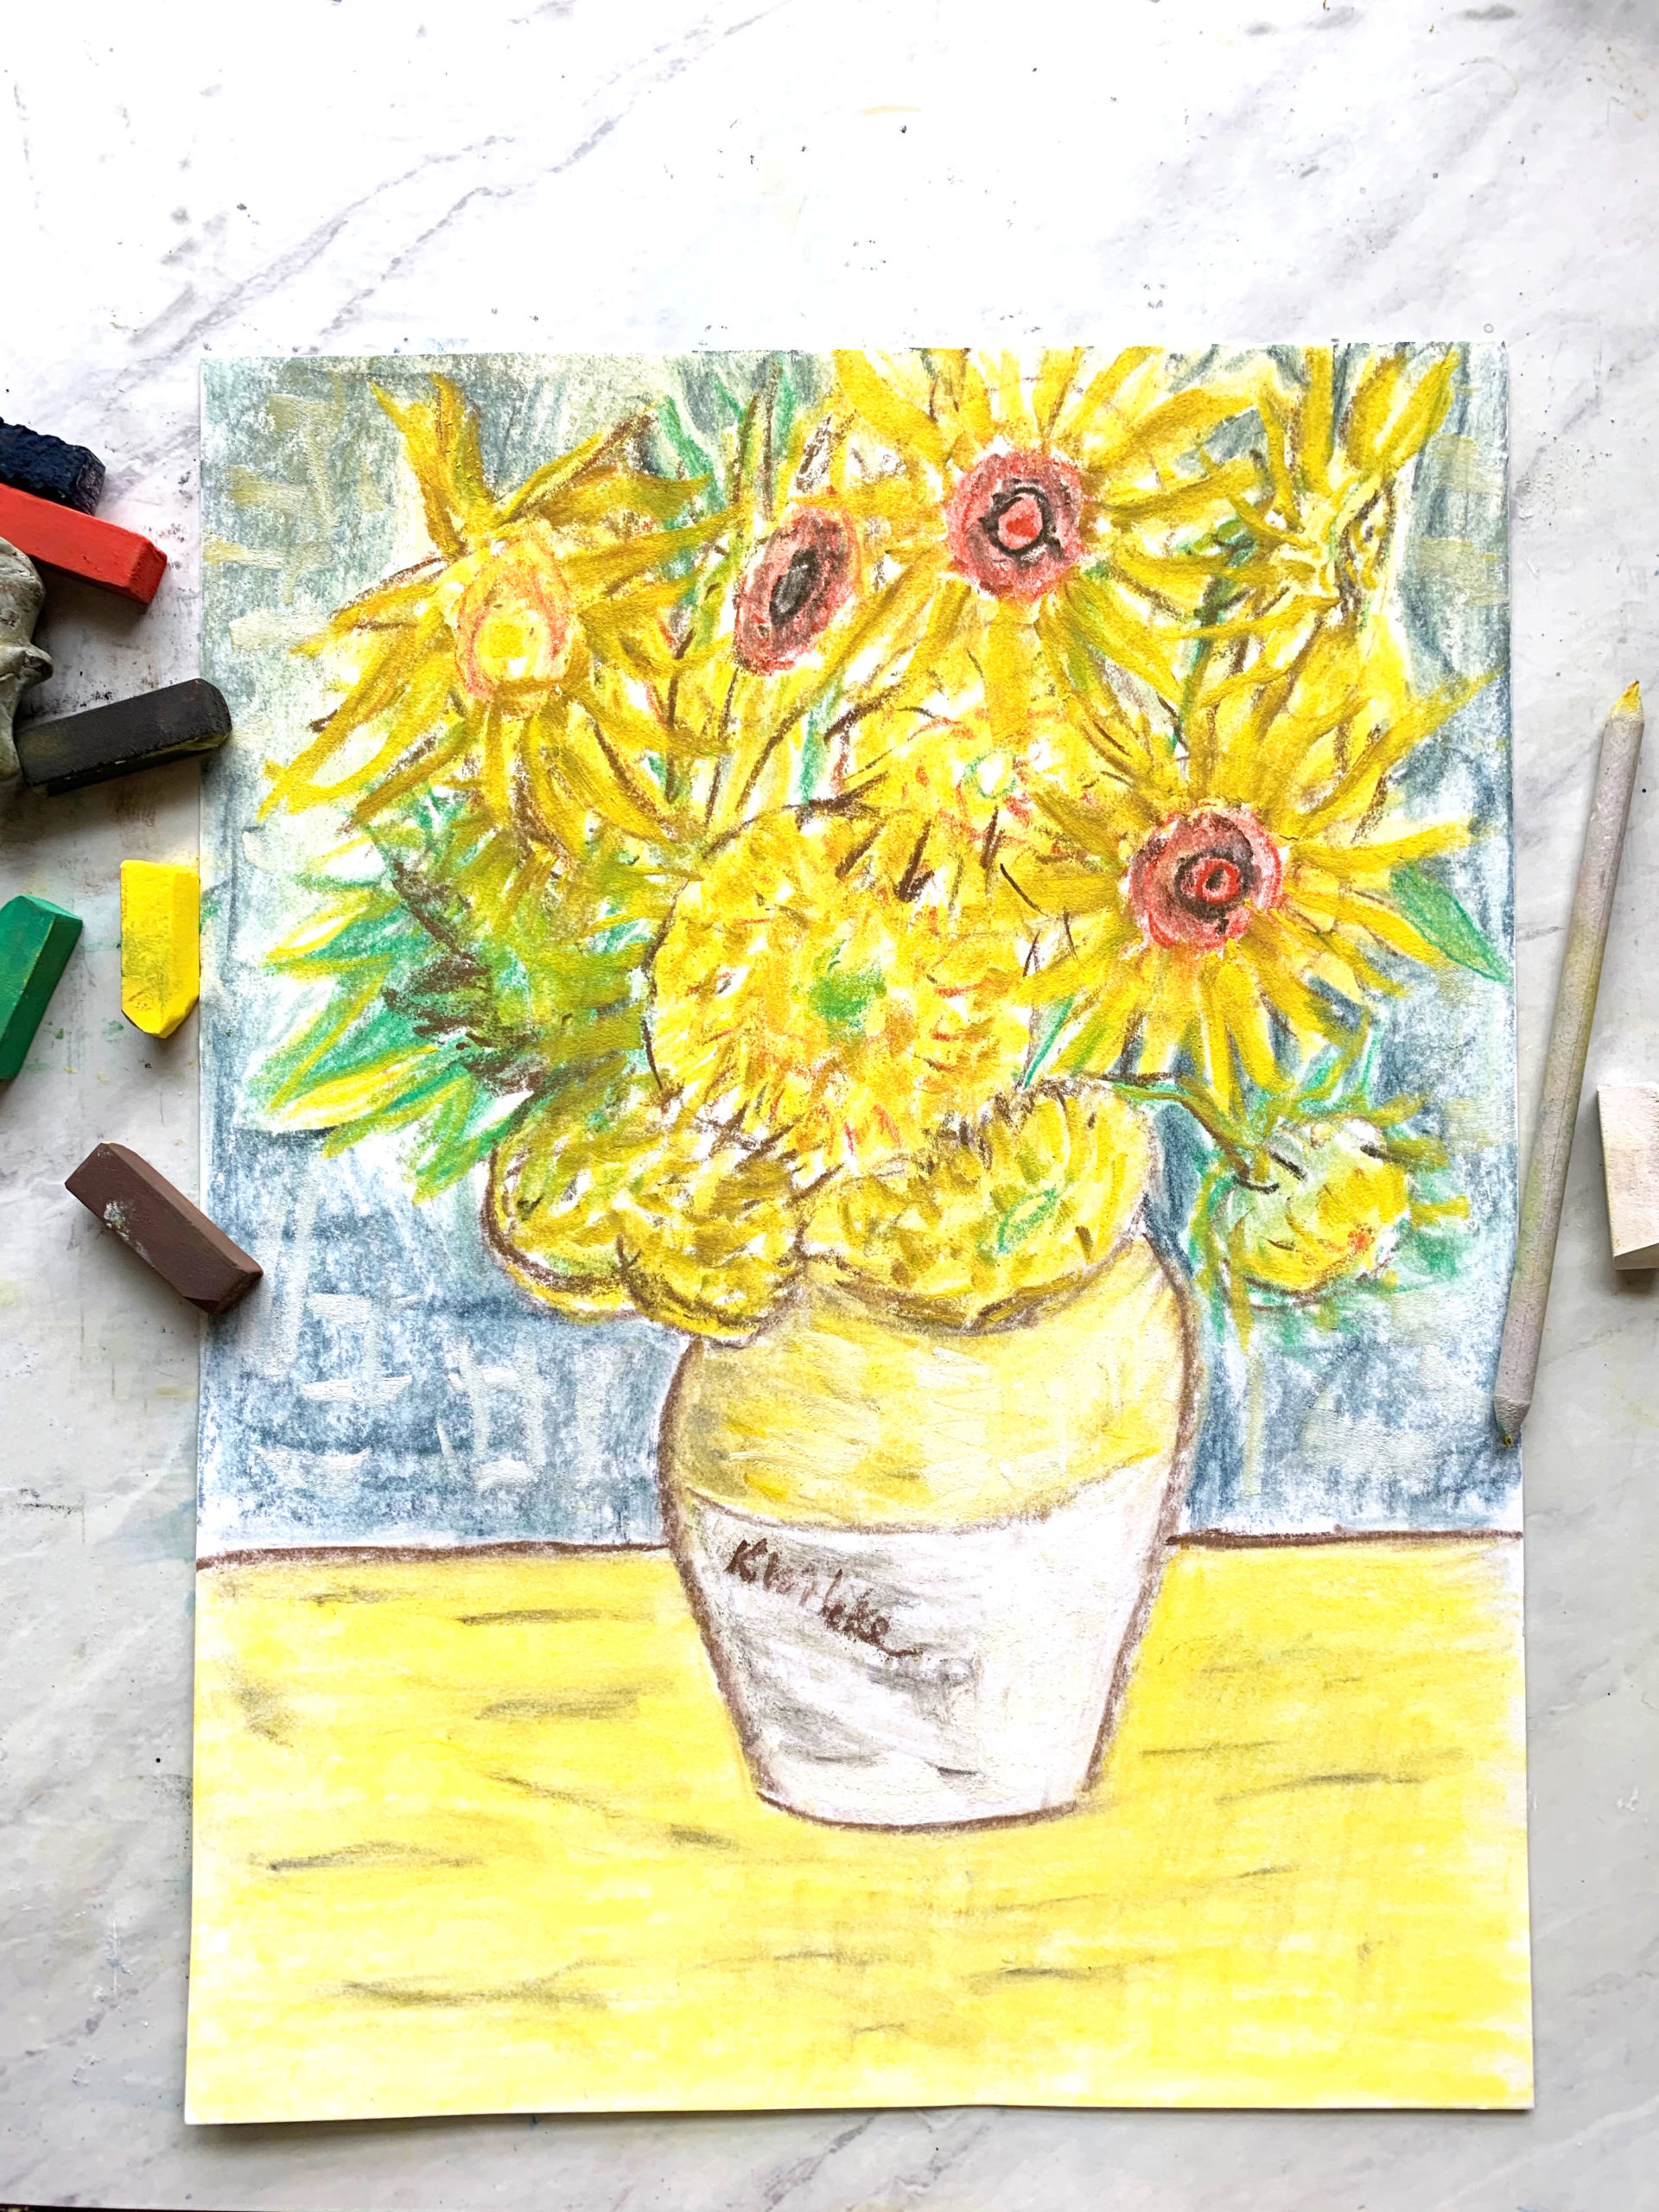 vincent van gogh sunflowers for kids